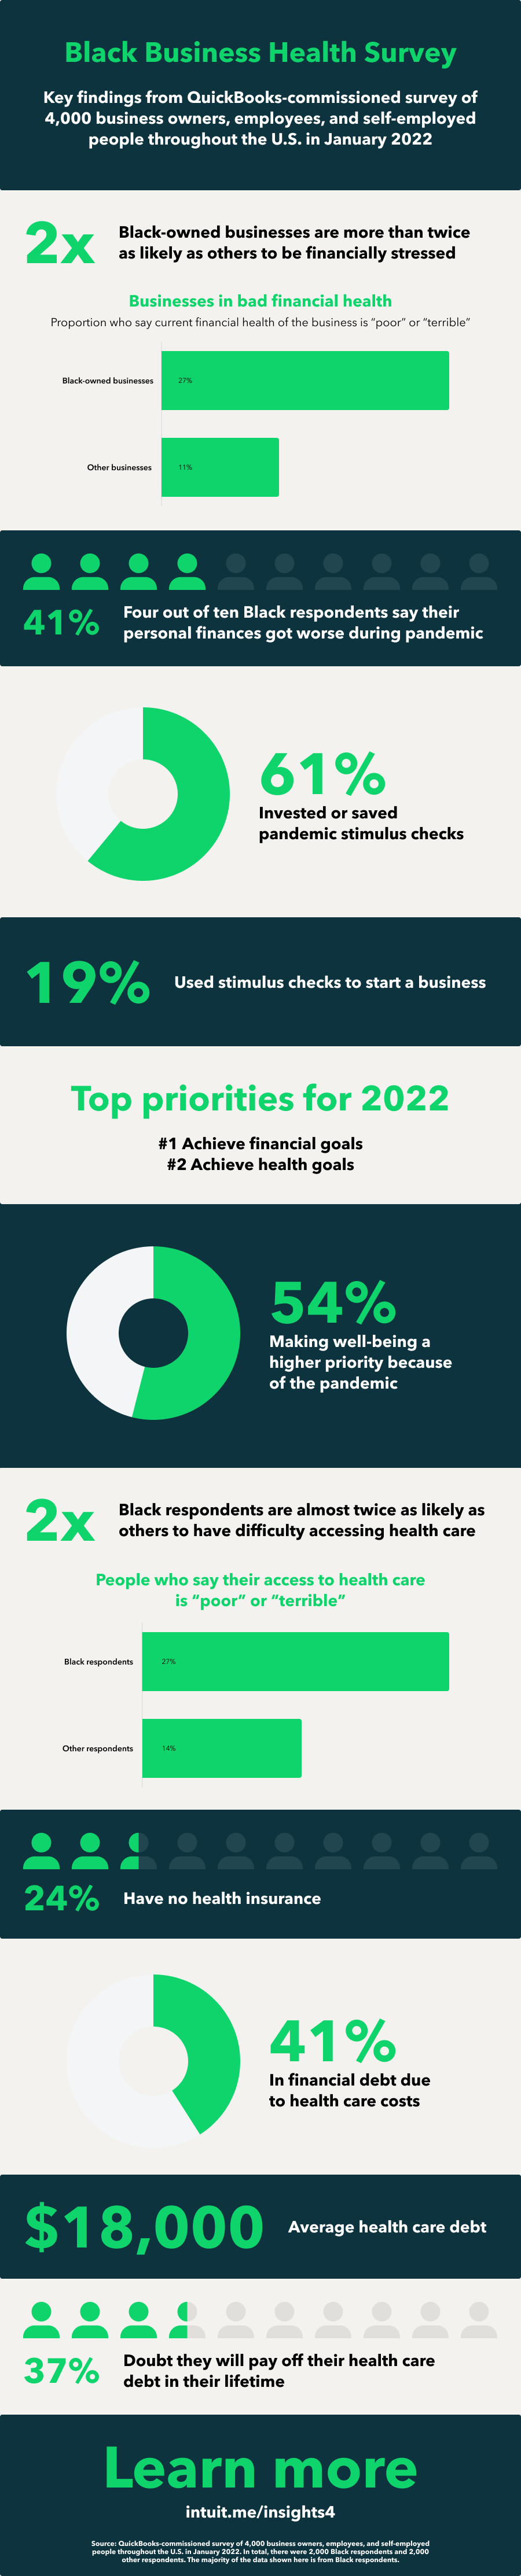 Black business health survey 2022